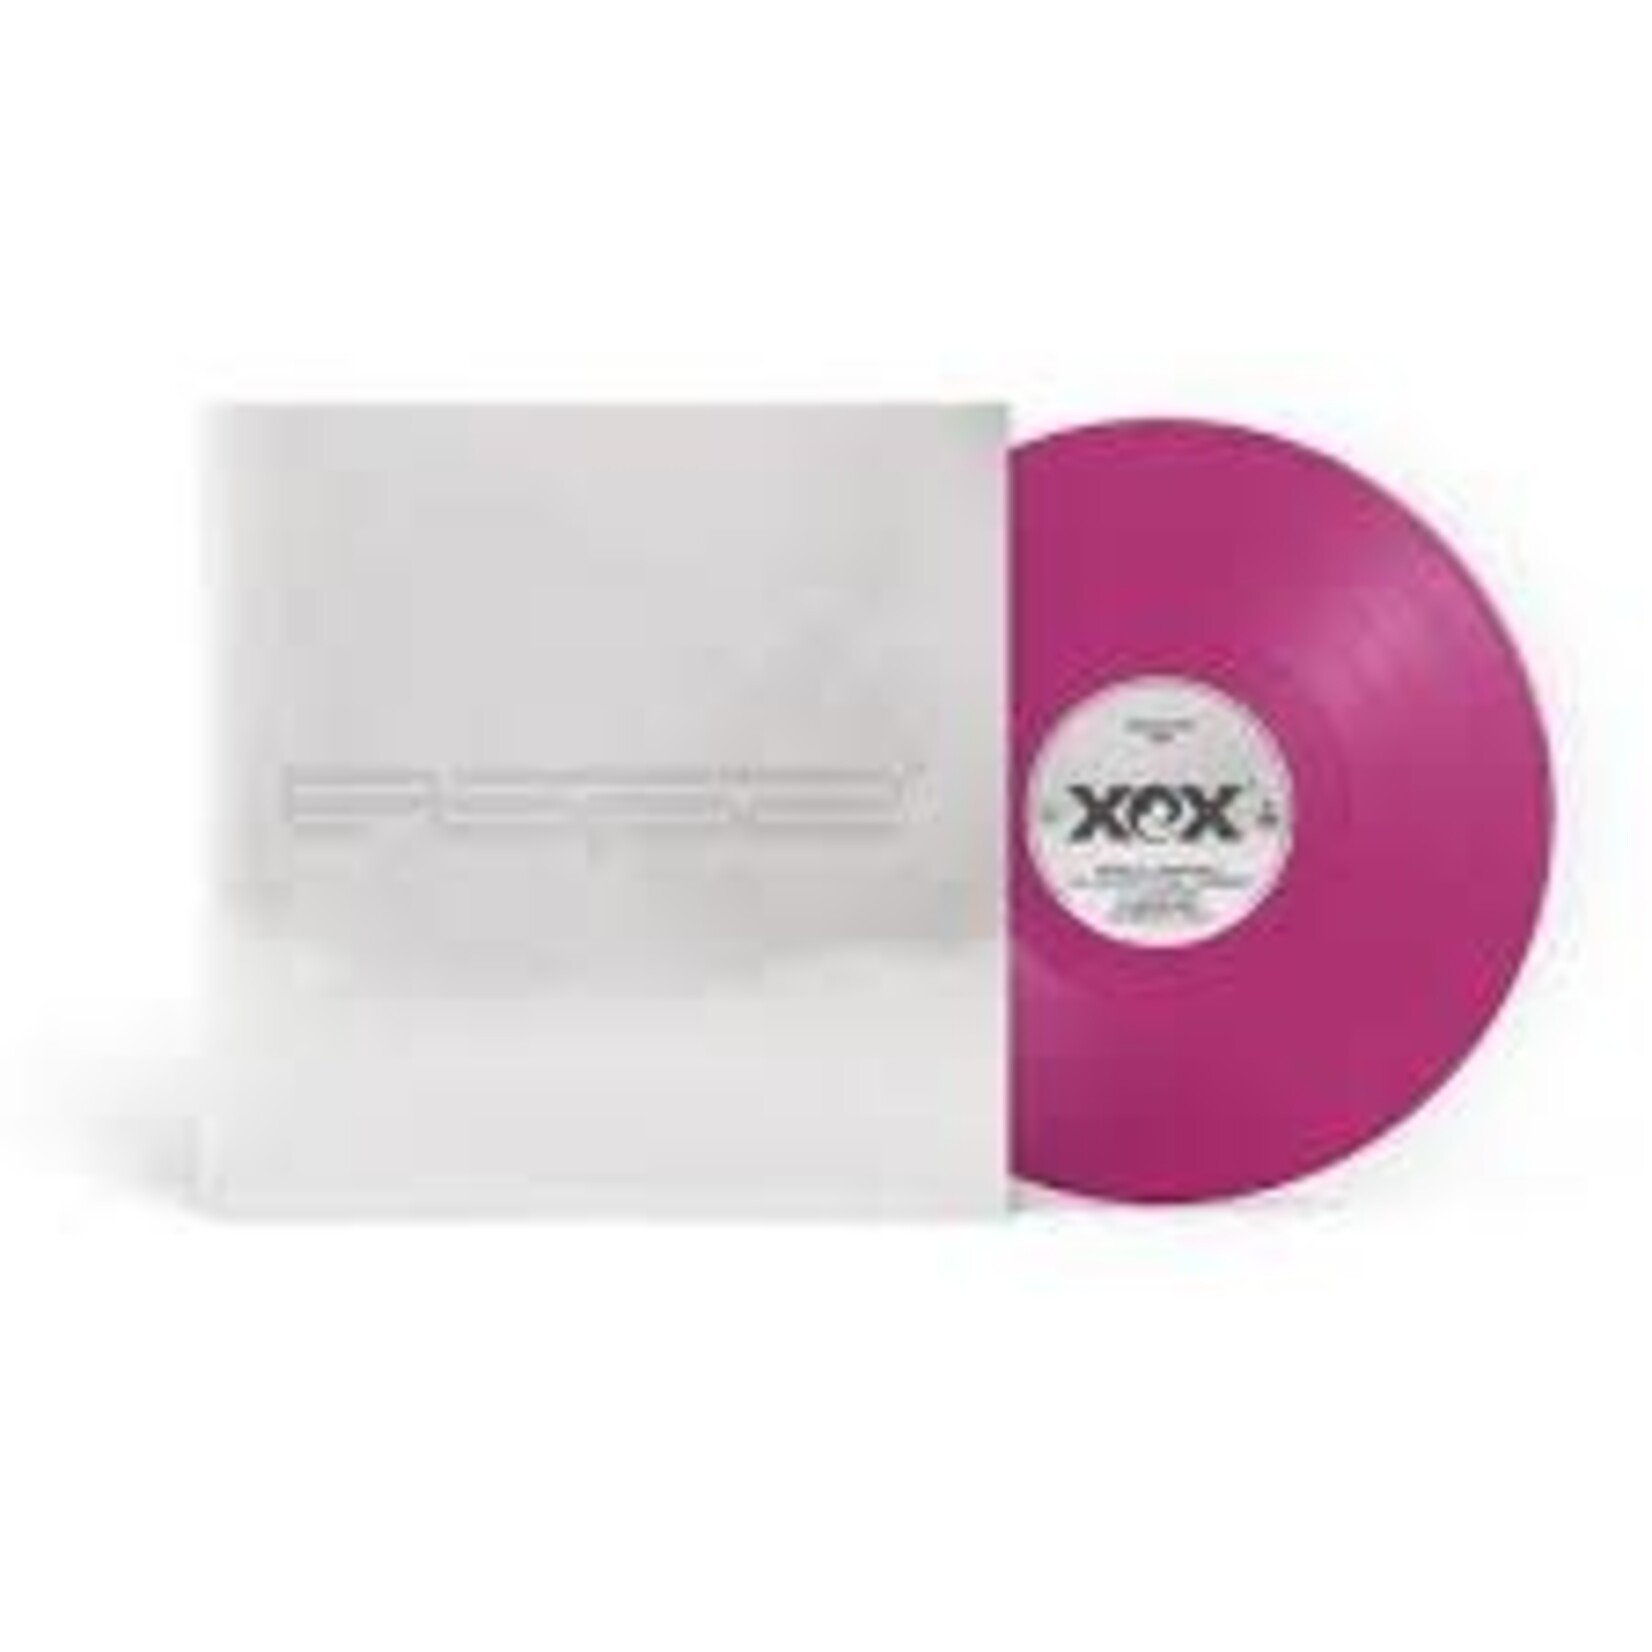 [New] Charli XCX - Pop 2 (5th Anniversary, translucent purple vinyl)